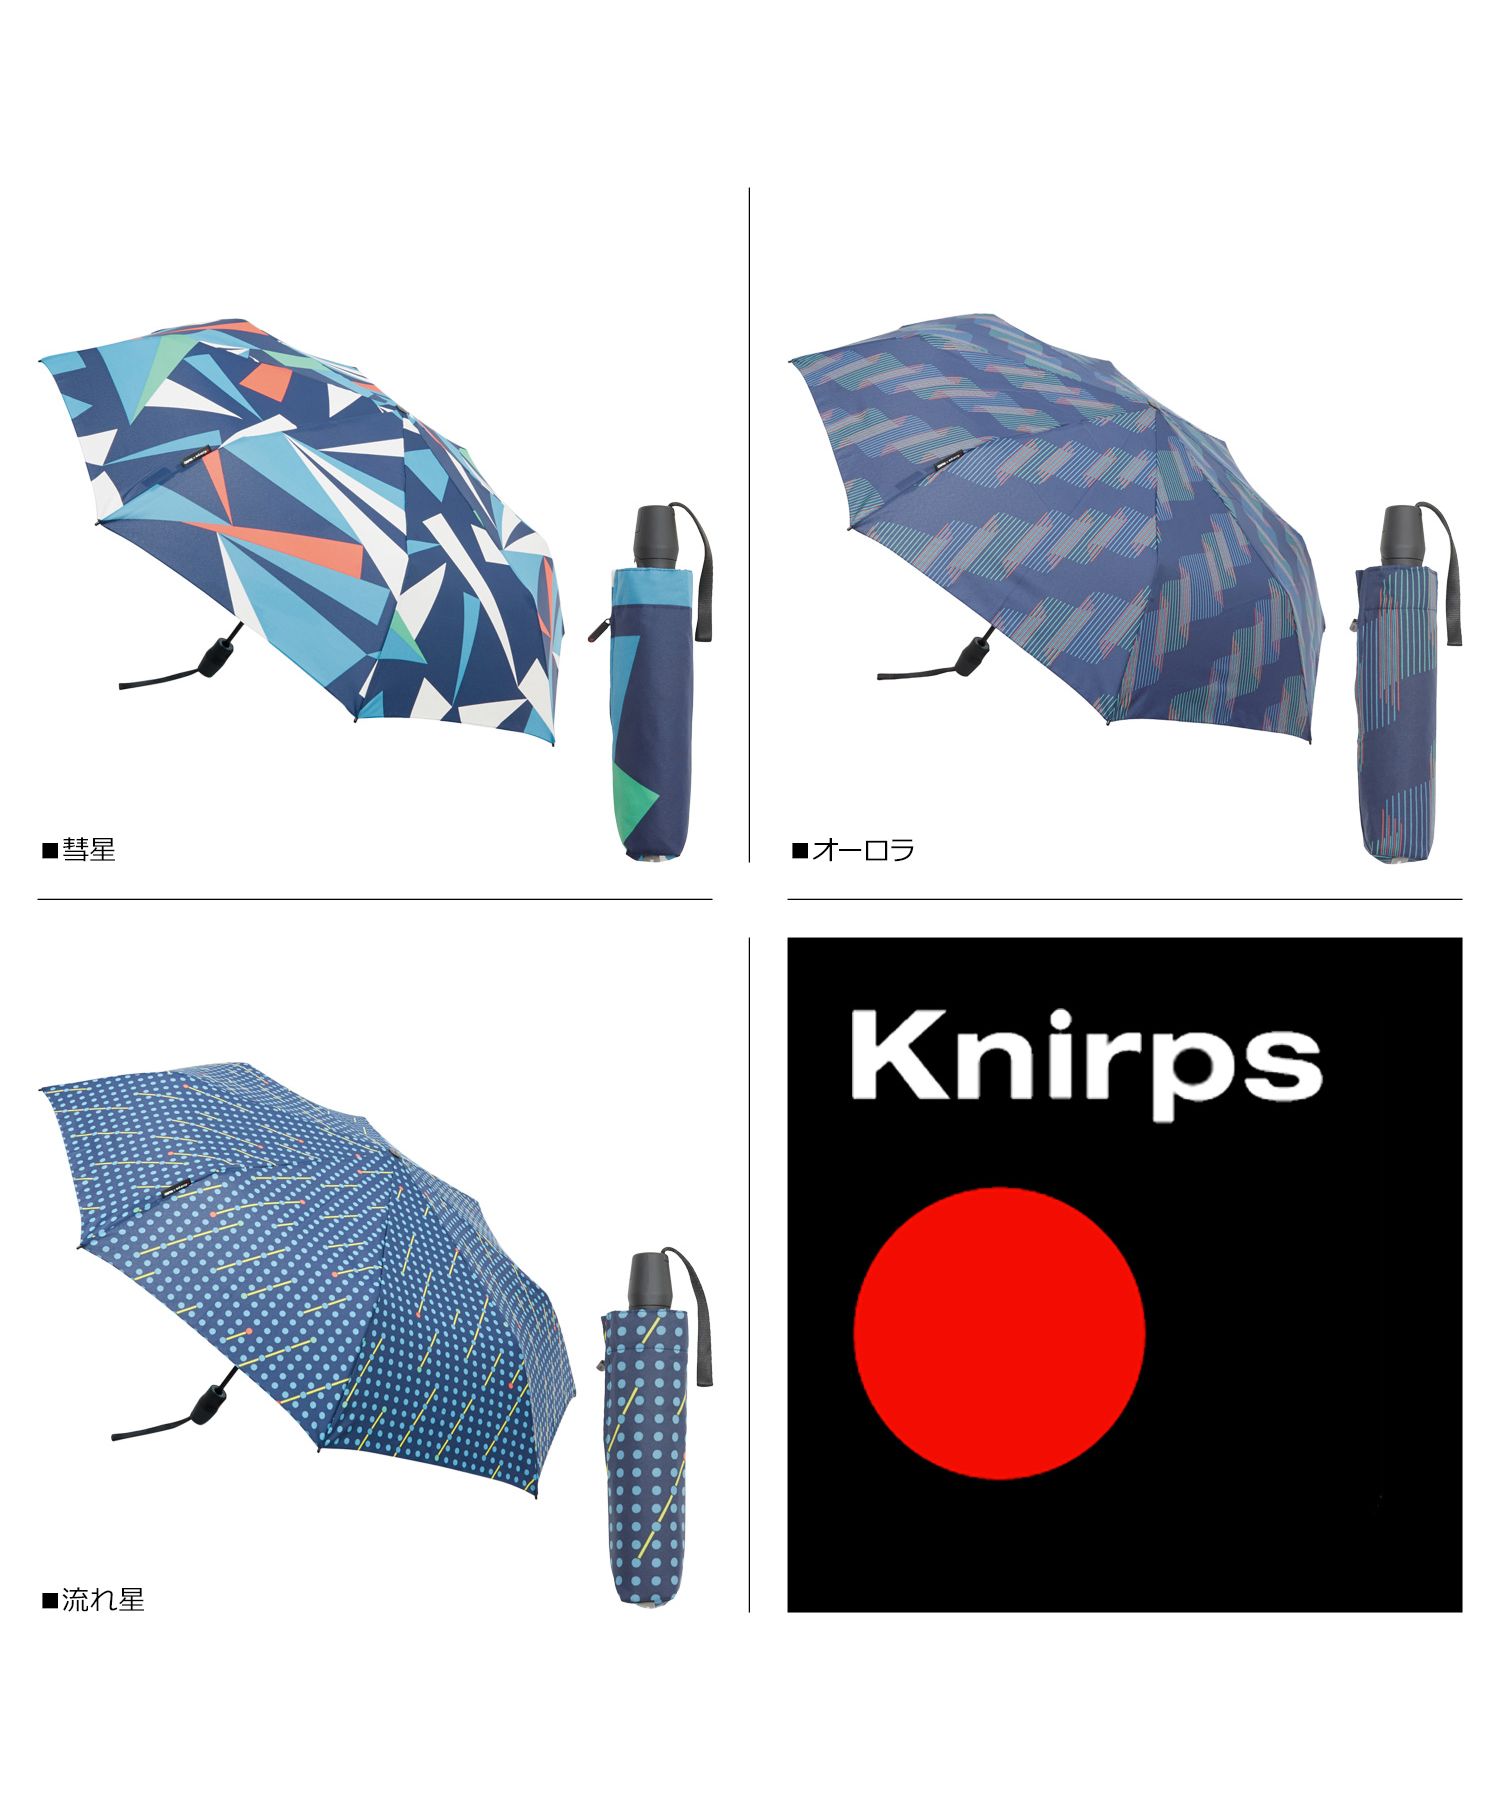 www.haoming.jp - Knirps クニルプス 折り畳み 価格比較